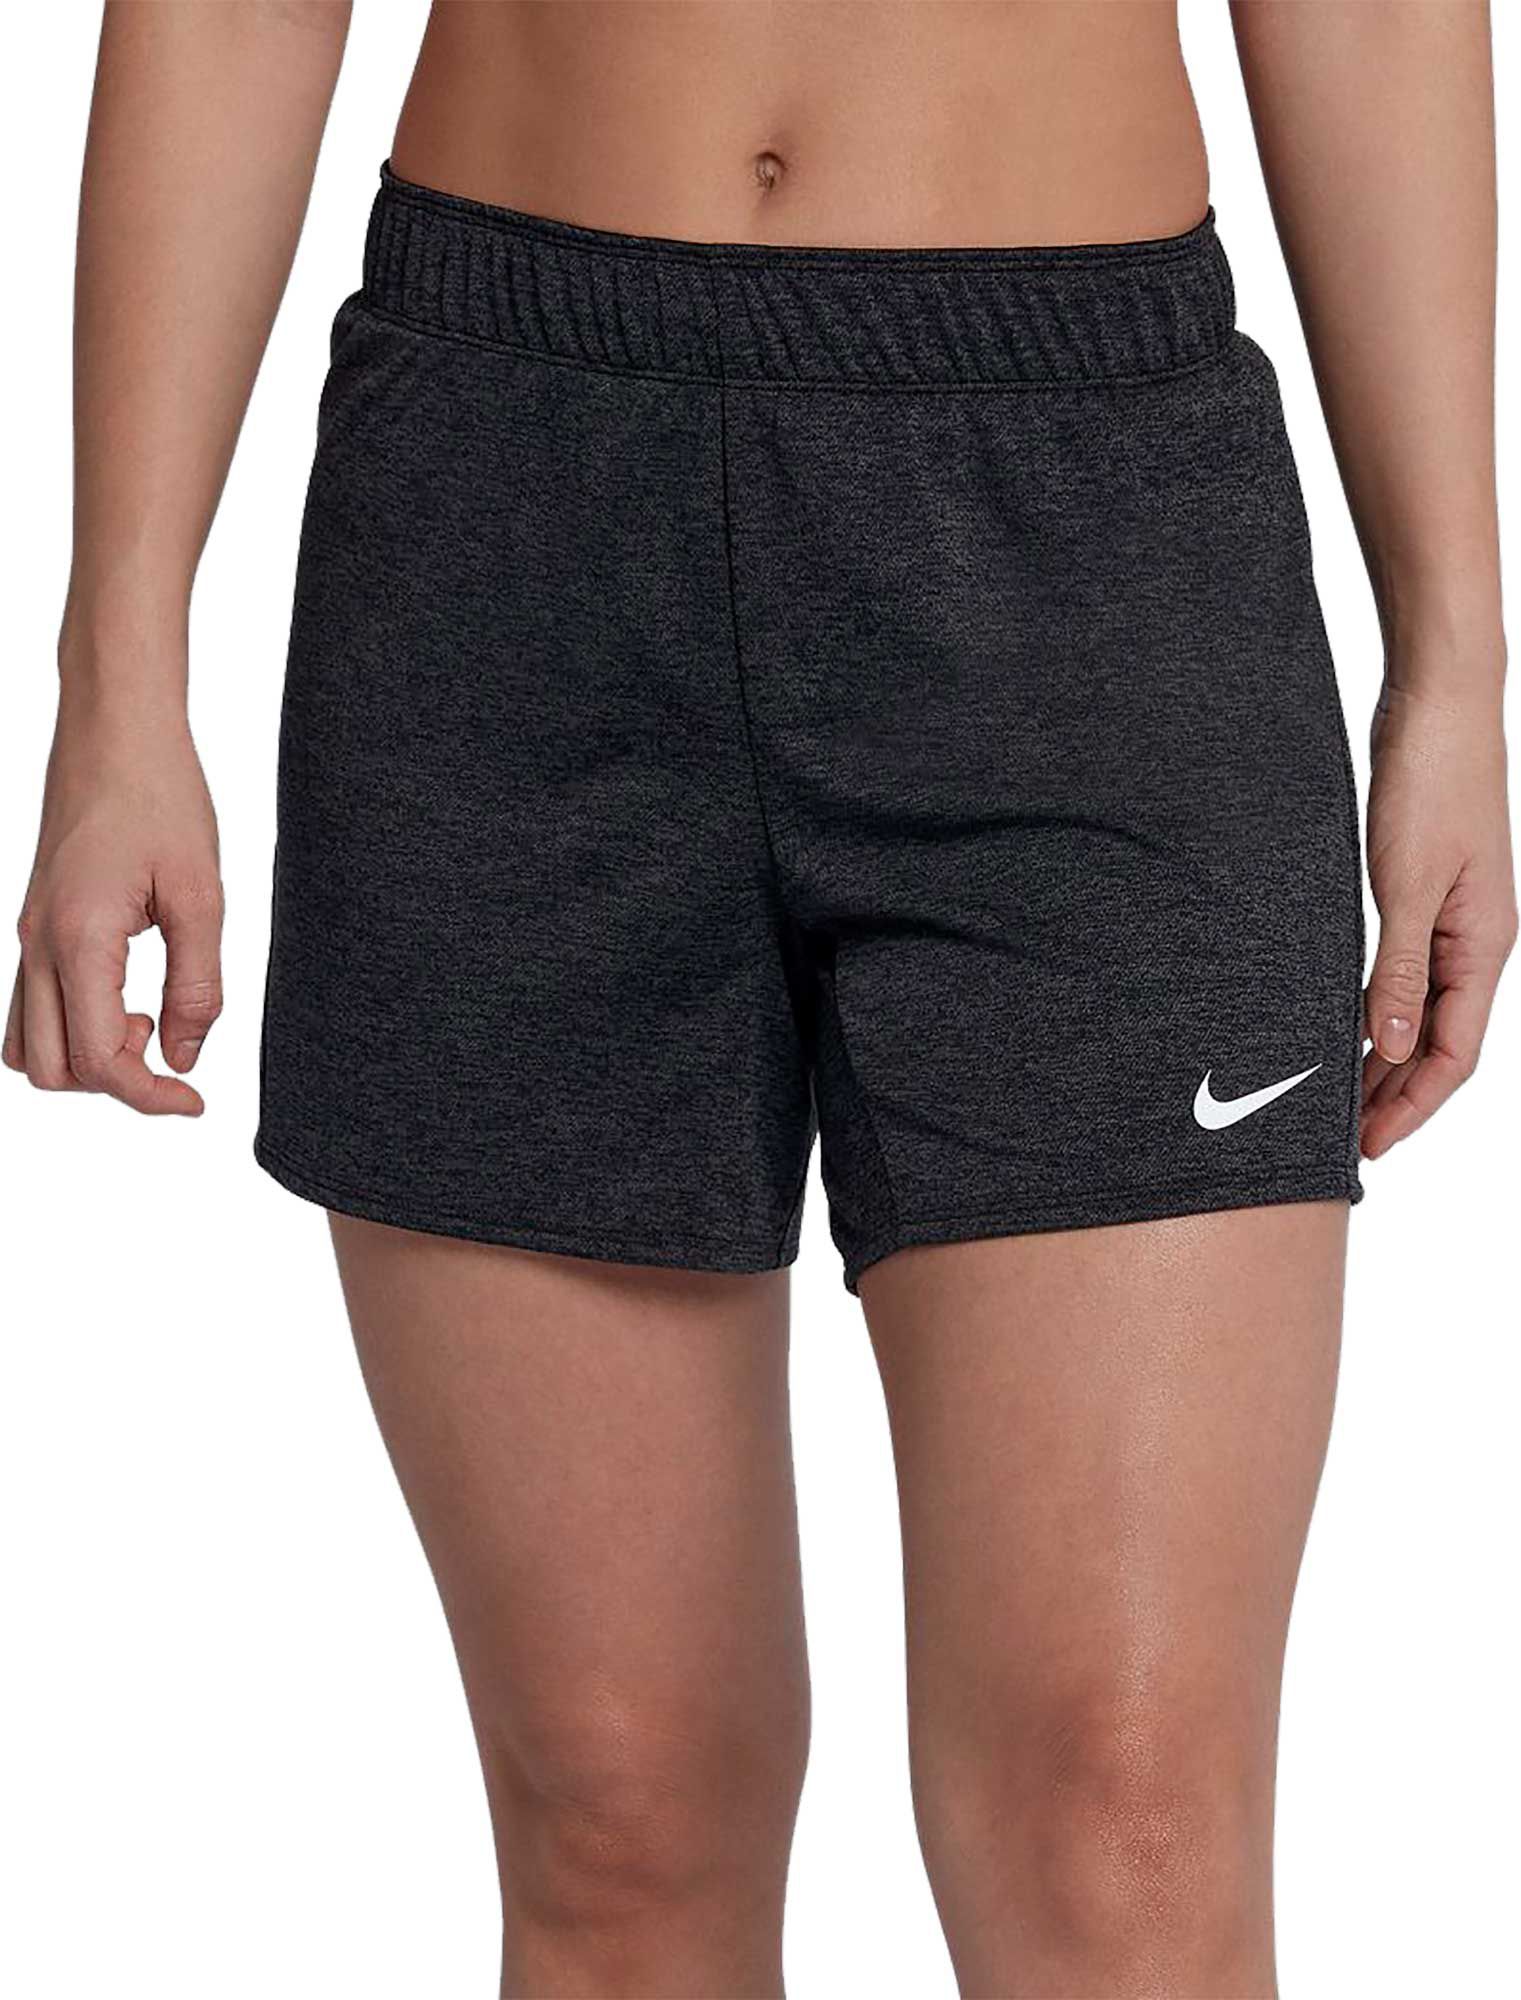 nike women's shorts 7 inch inseam